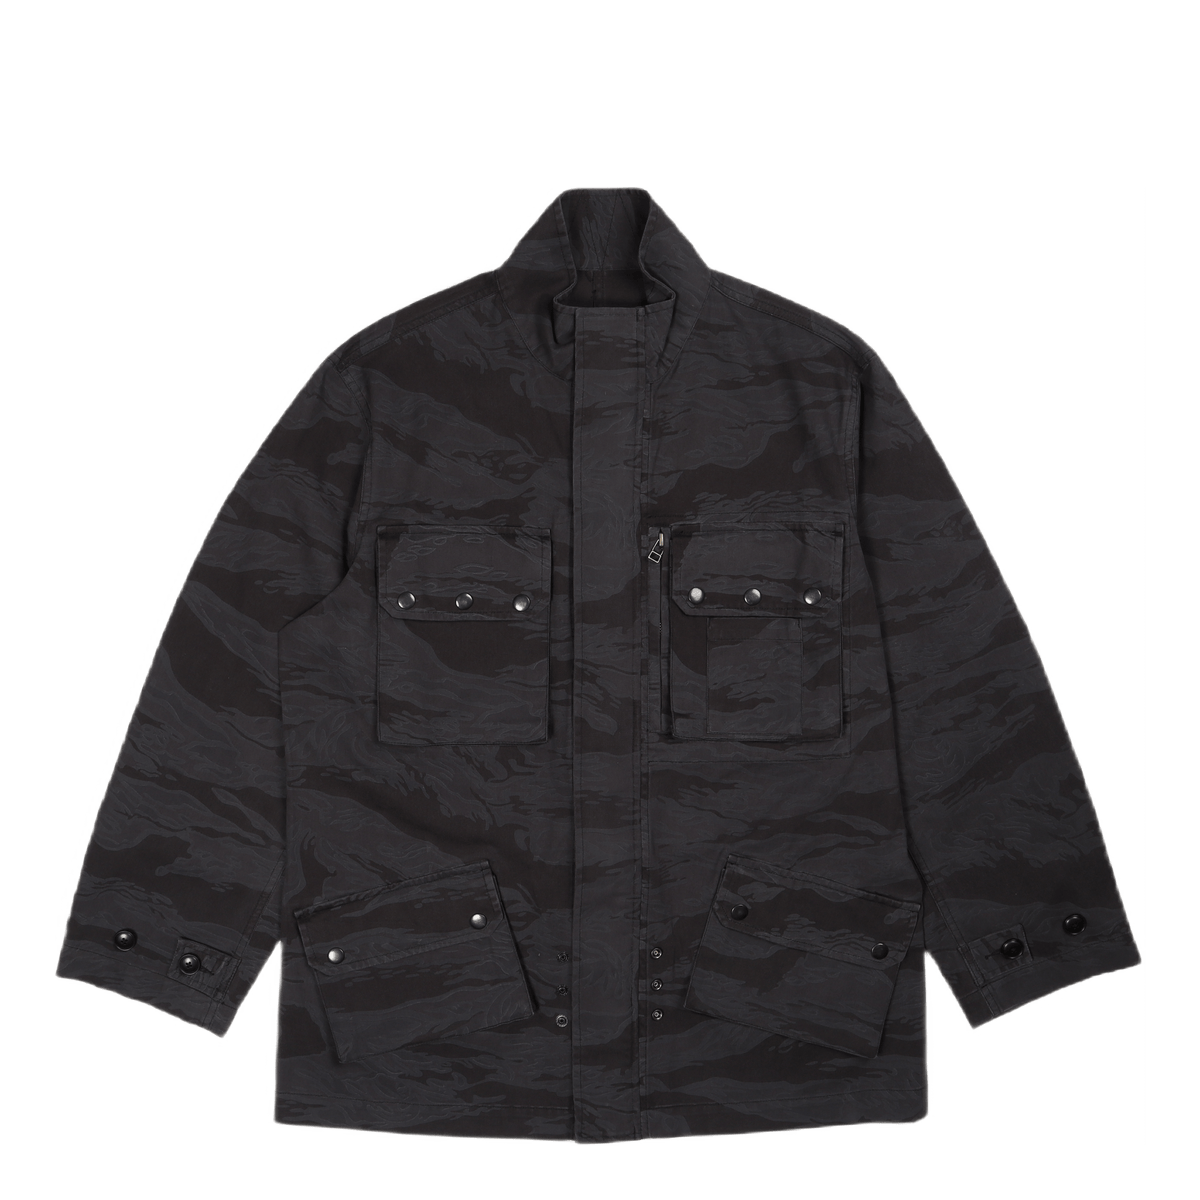 Camo Paratrooper Jacket Cotton Subdued Night Tigerstripe